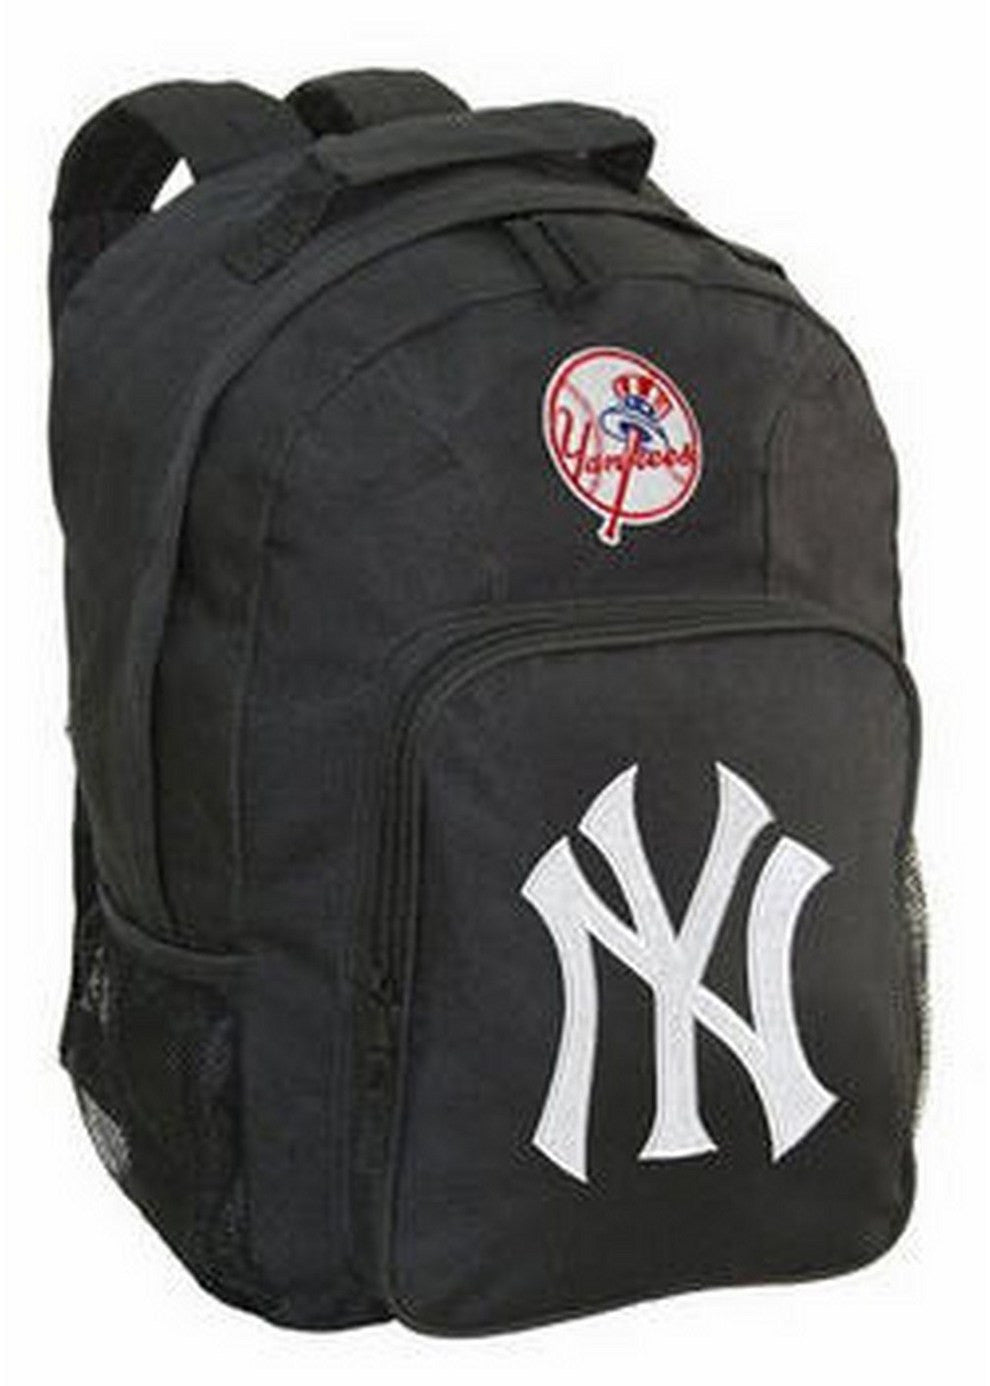 Southpaw Backpack Mlb Black - New York Yankees